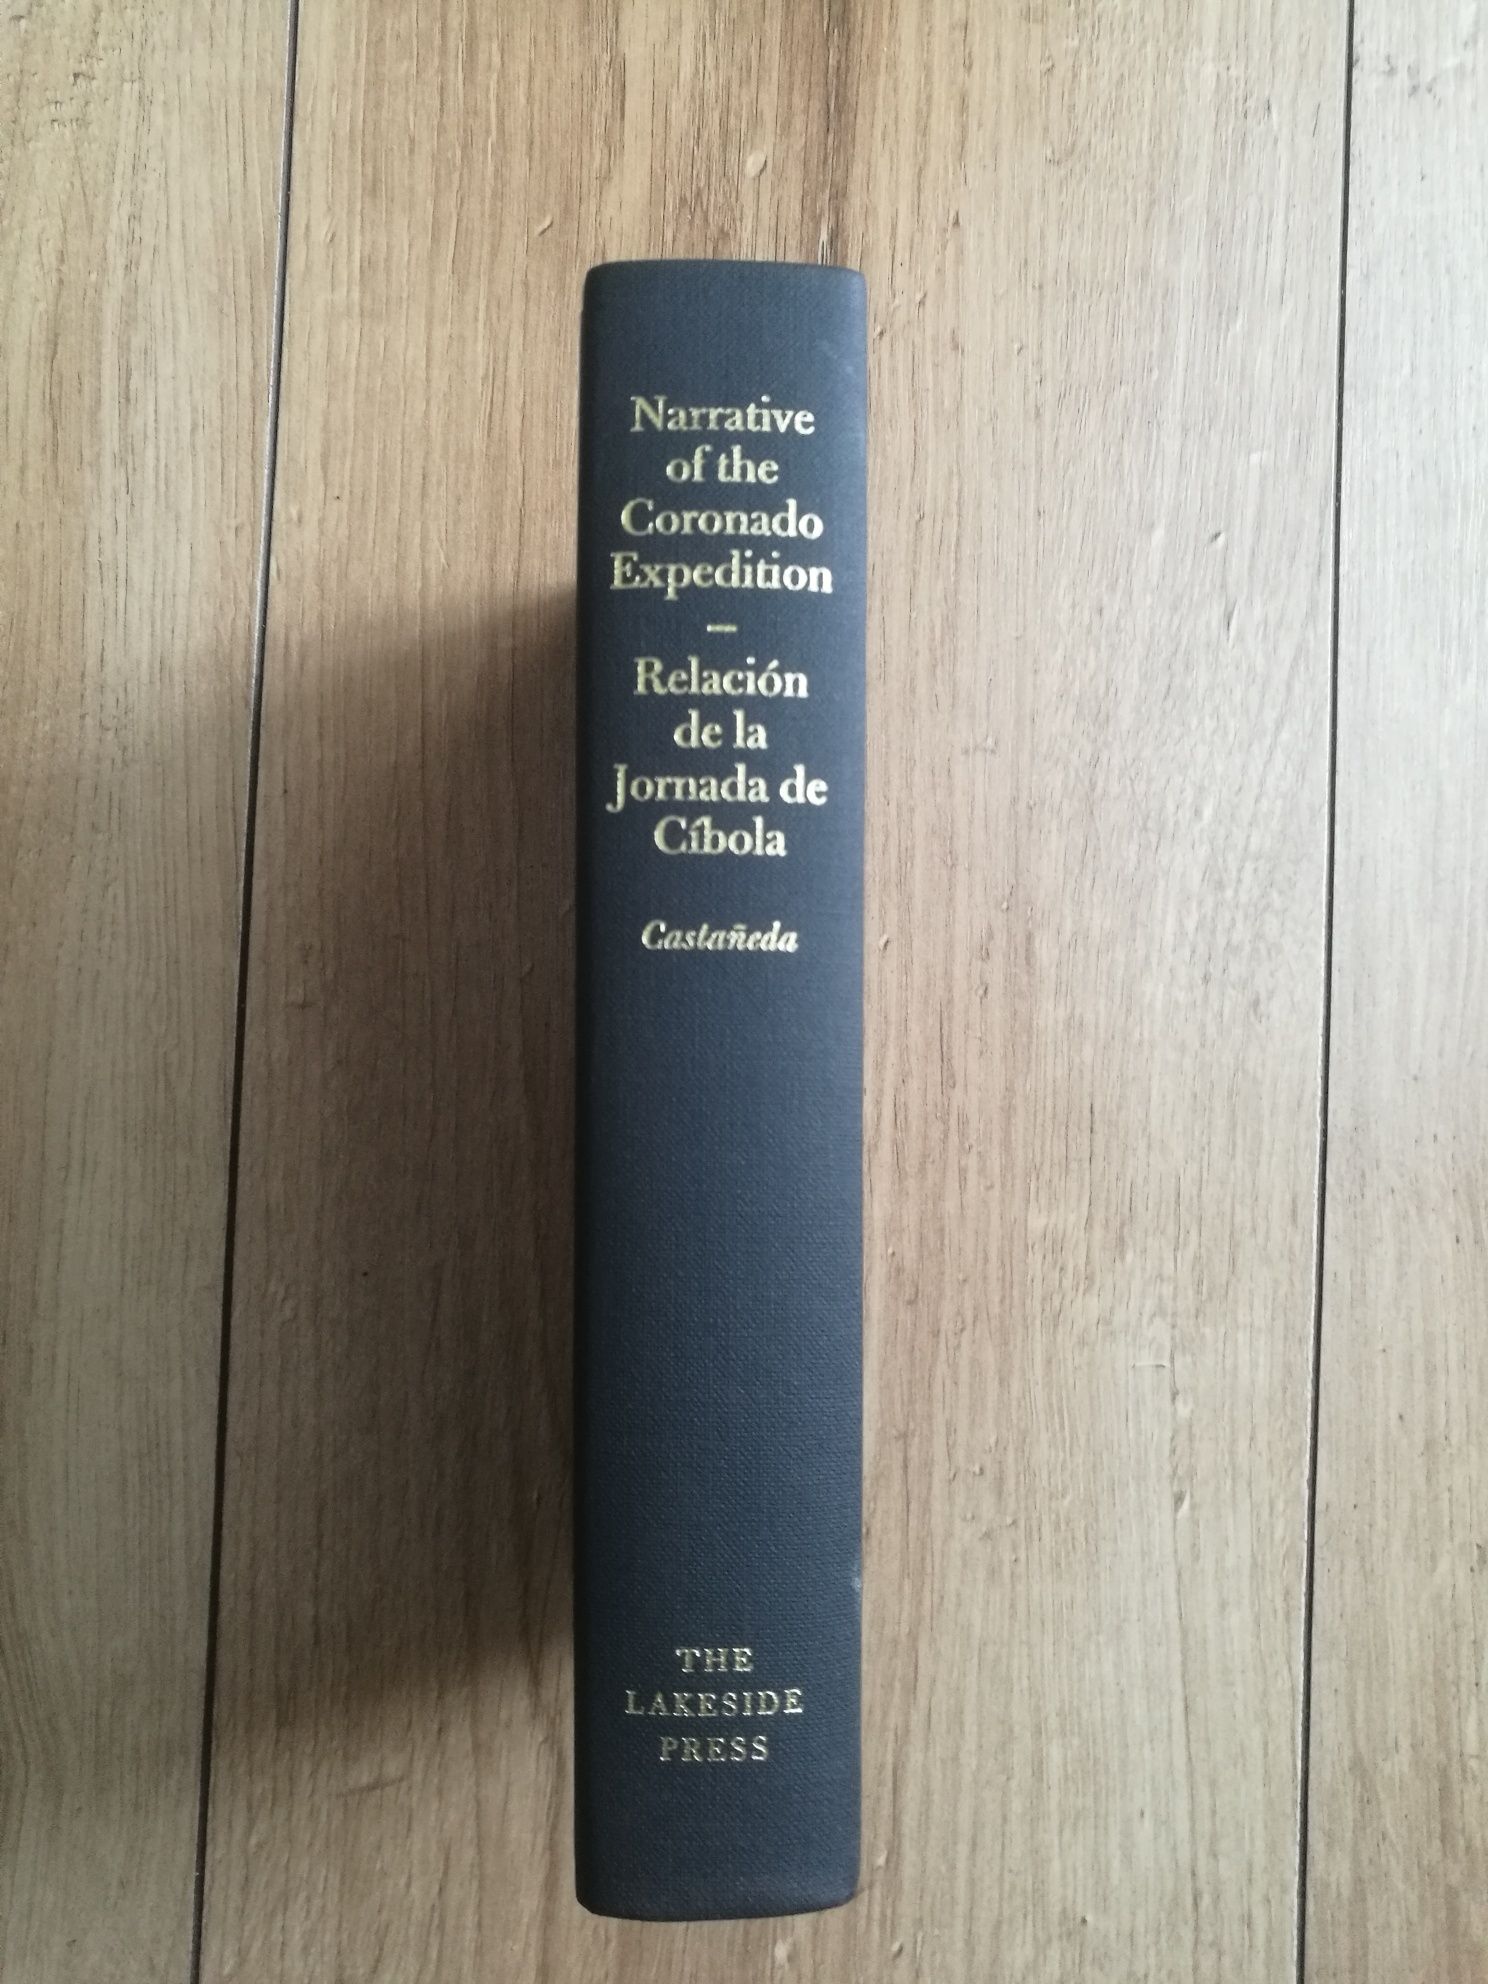 Książka Narrative of the Coronado Expedition po ENG/ESP 2002